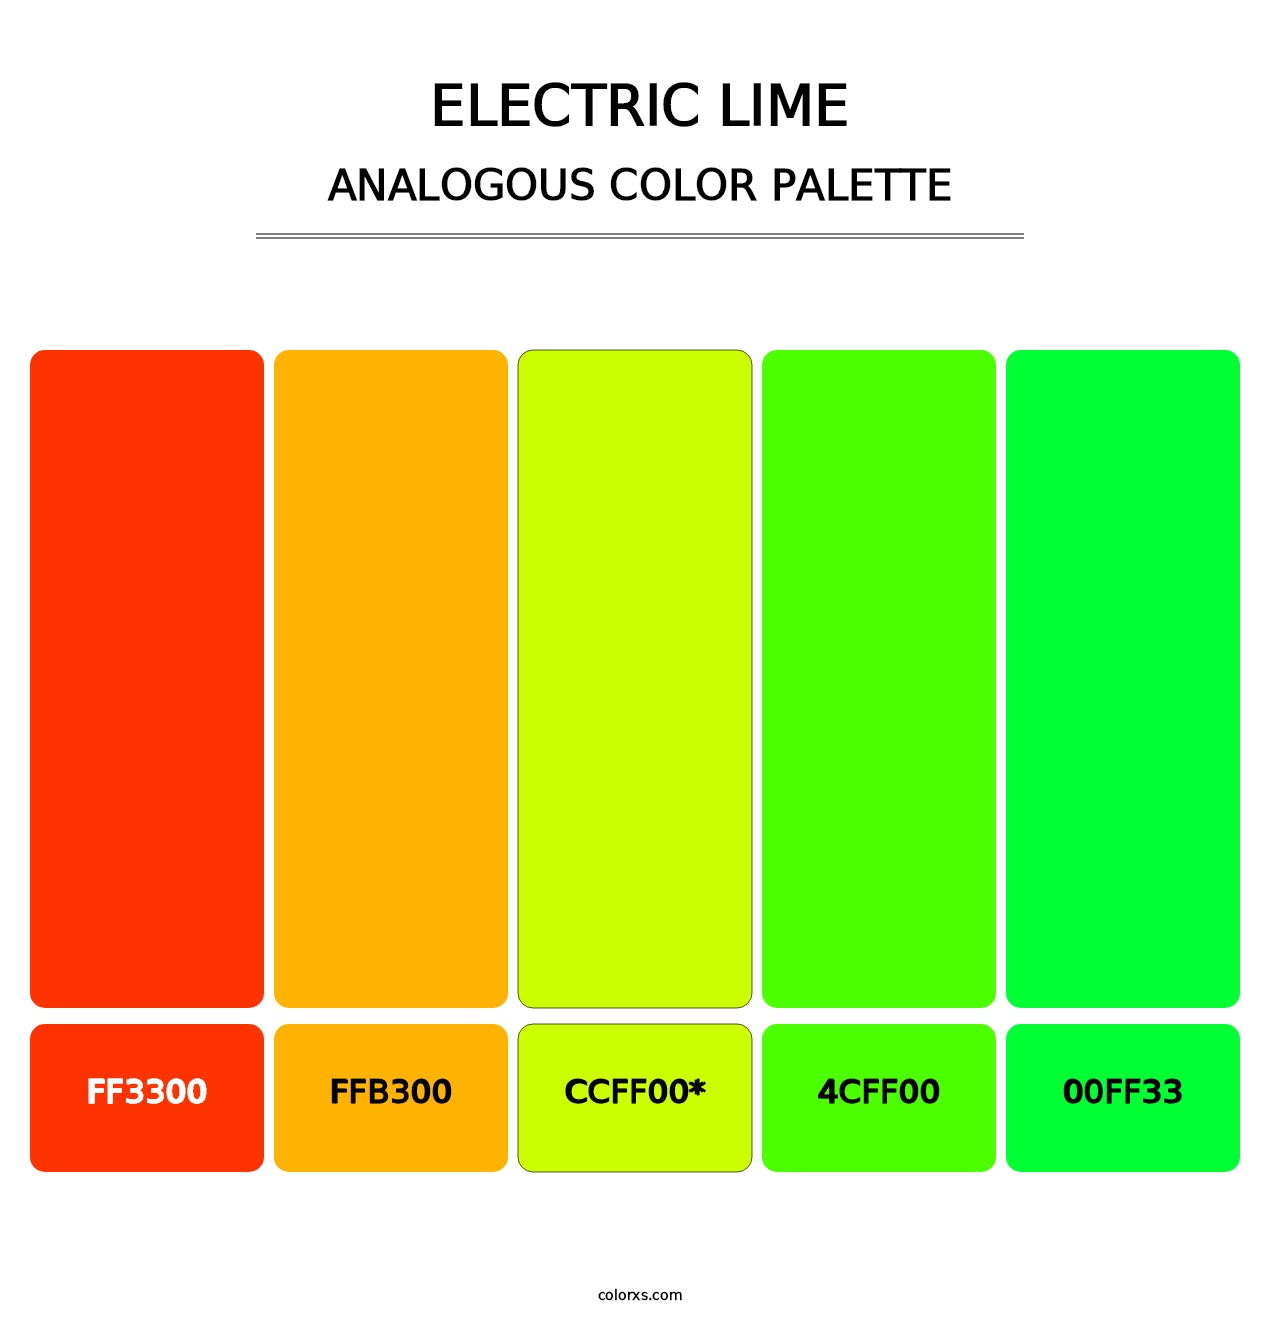 Electric Lime - Analogous Color Palette